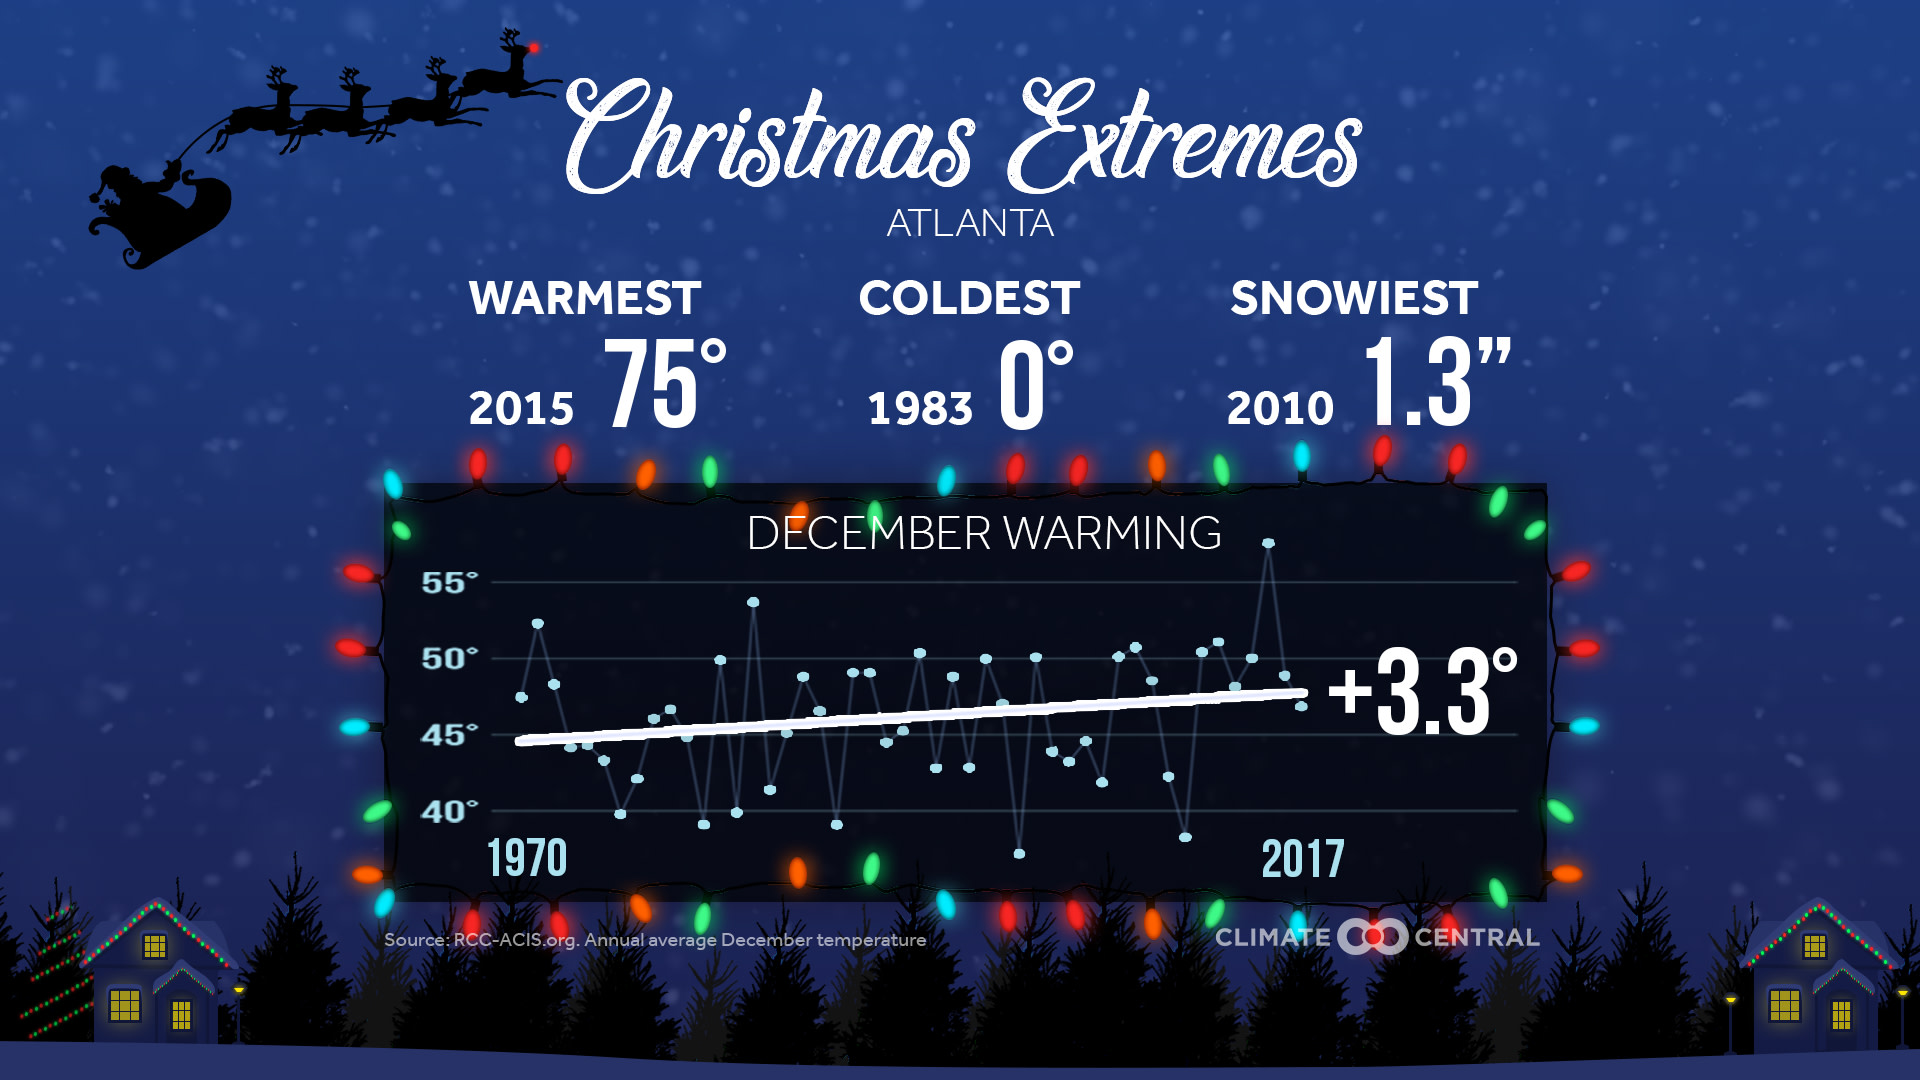 Market - Holiday Warming & Extremes